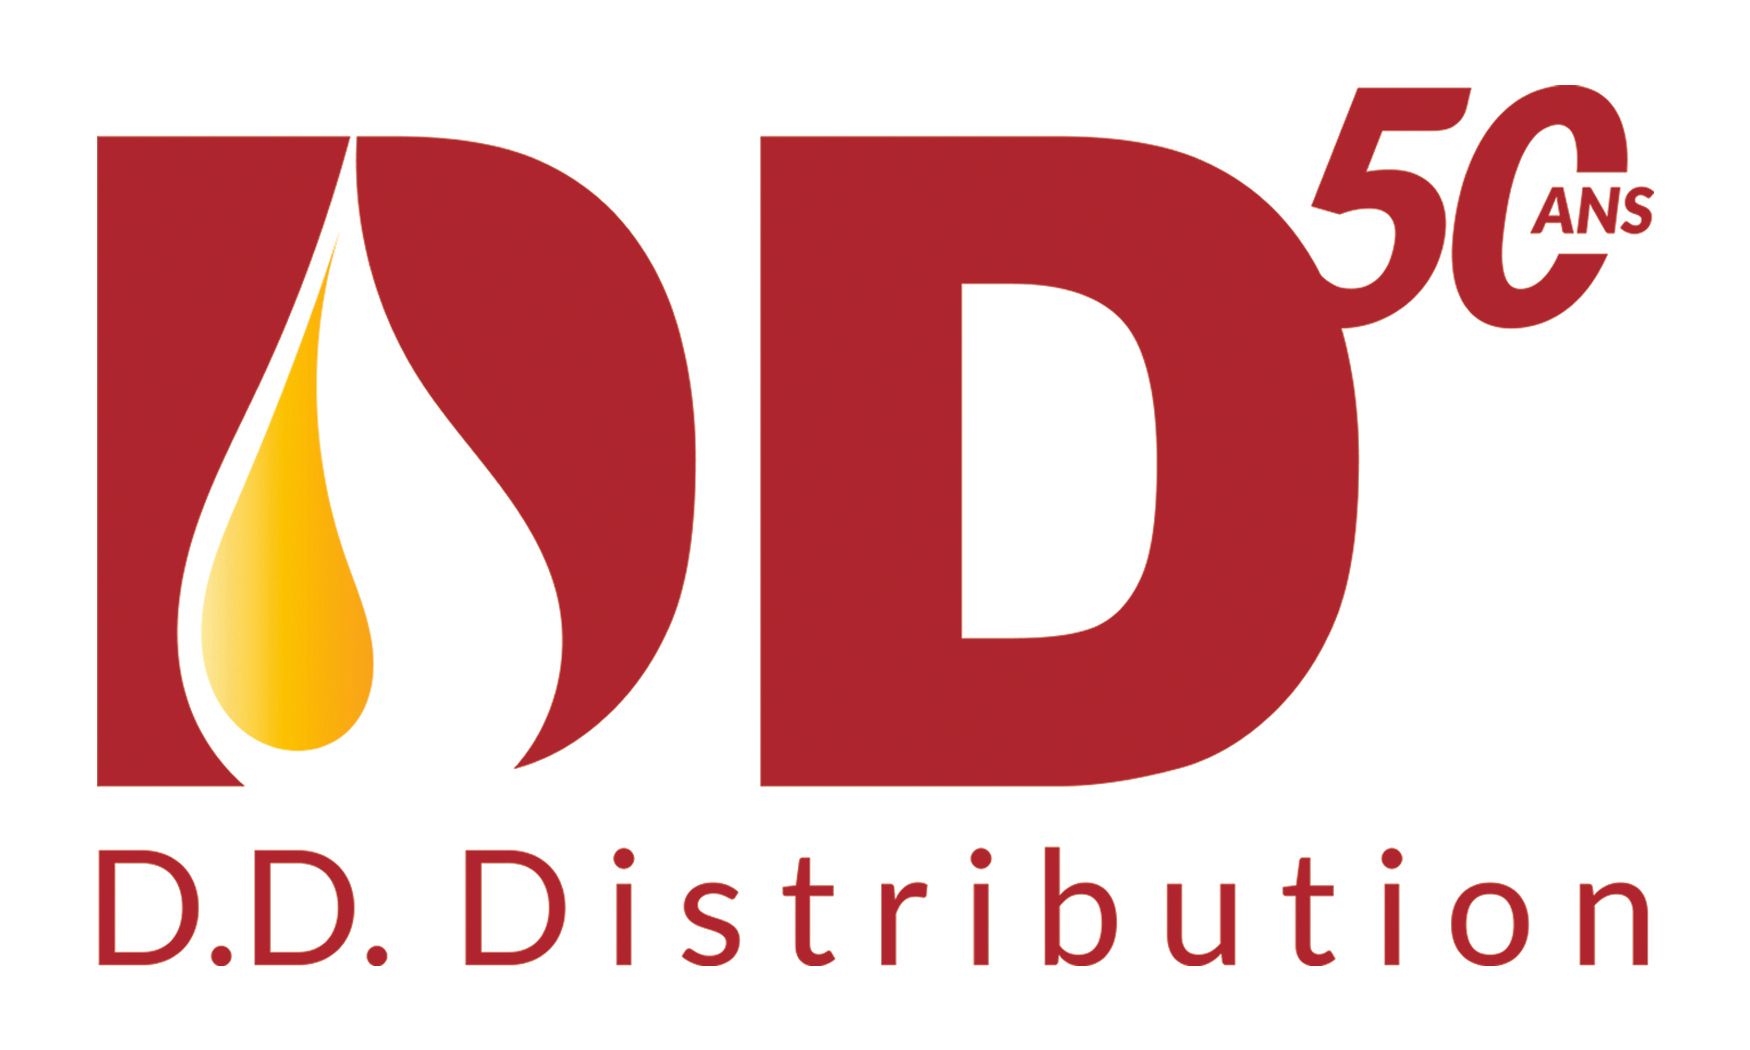 DD Distribution logo